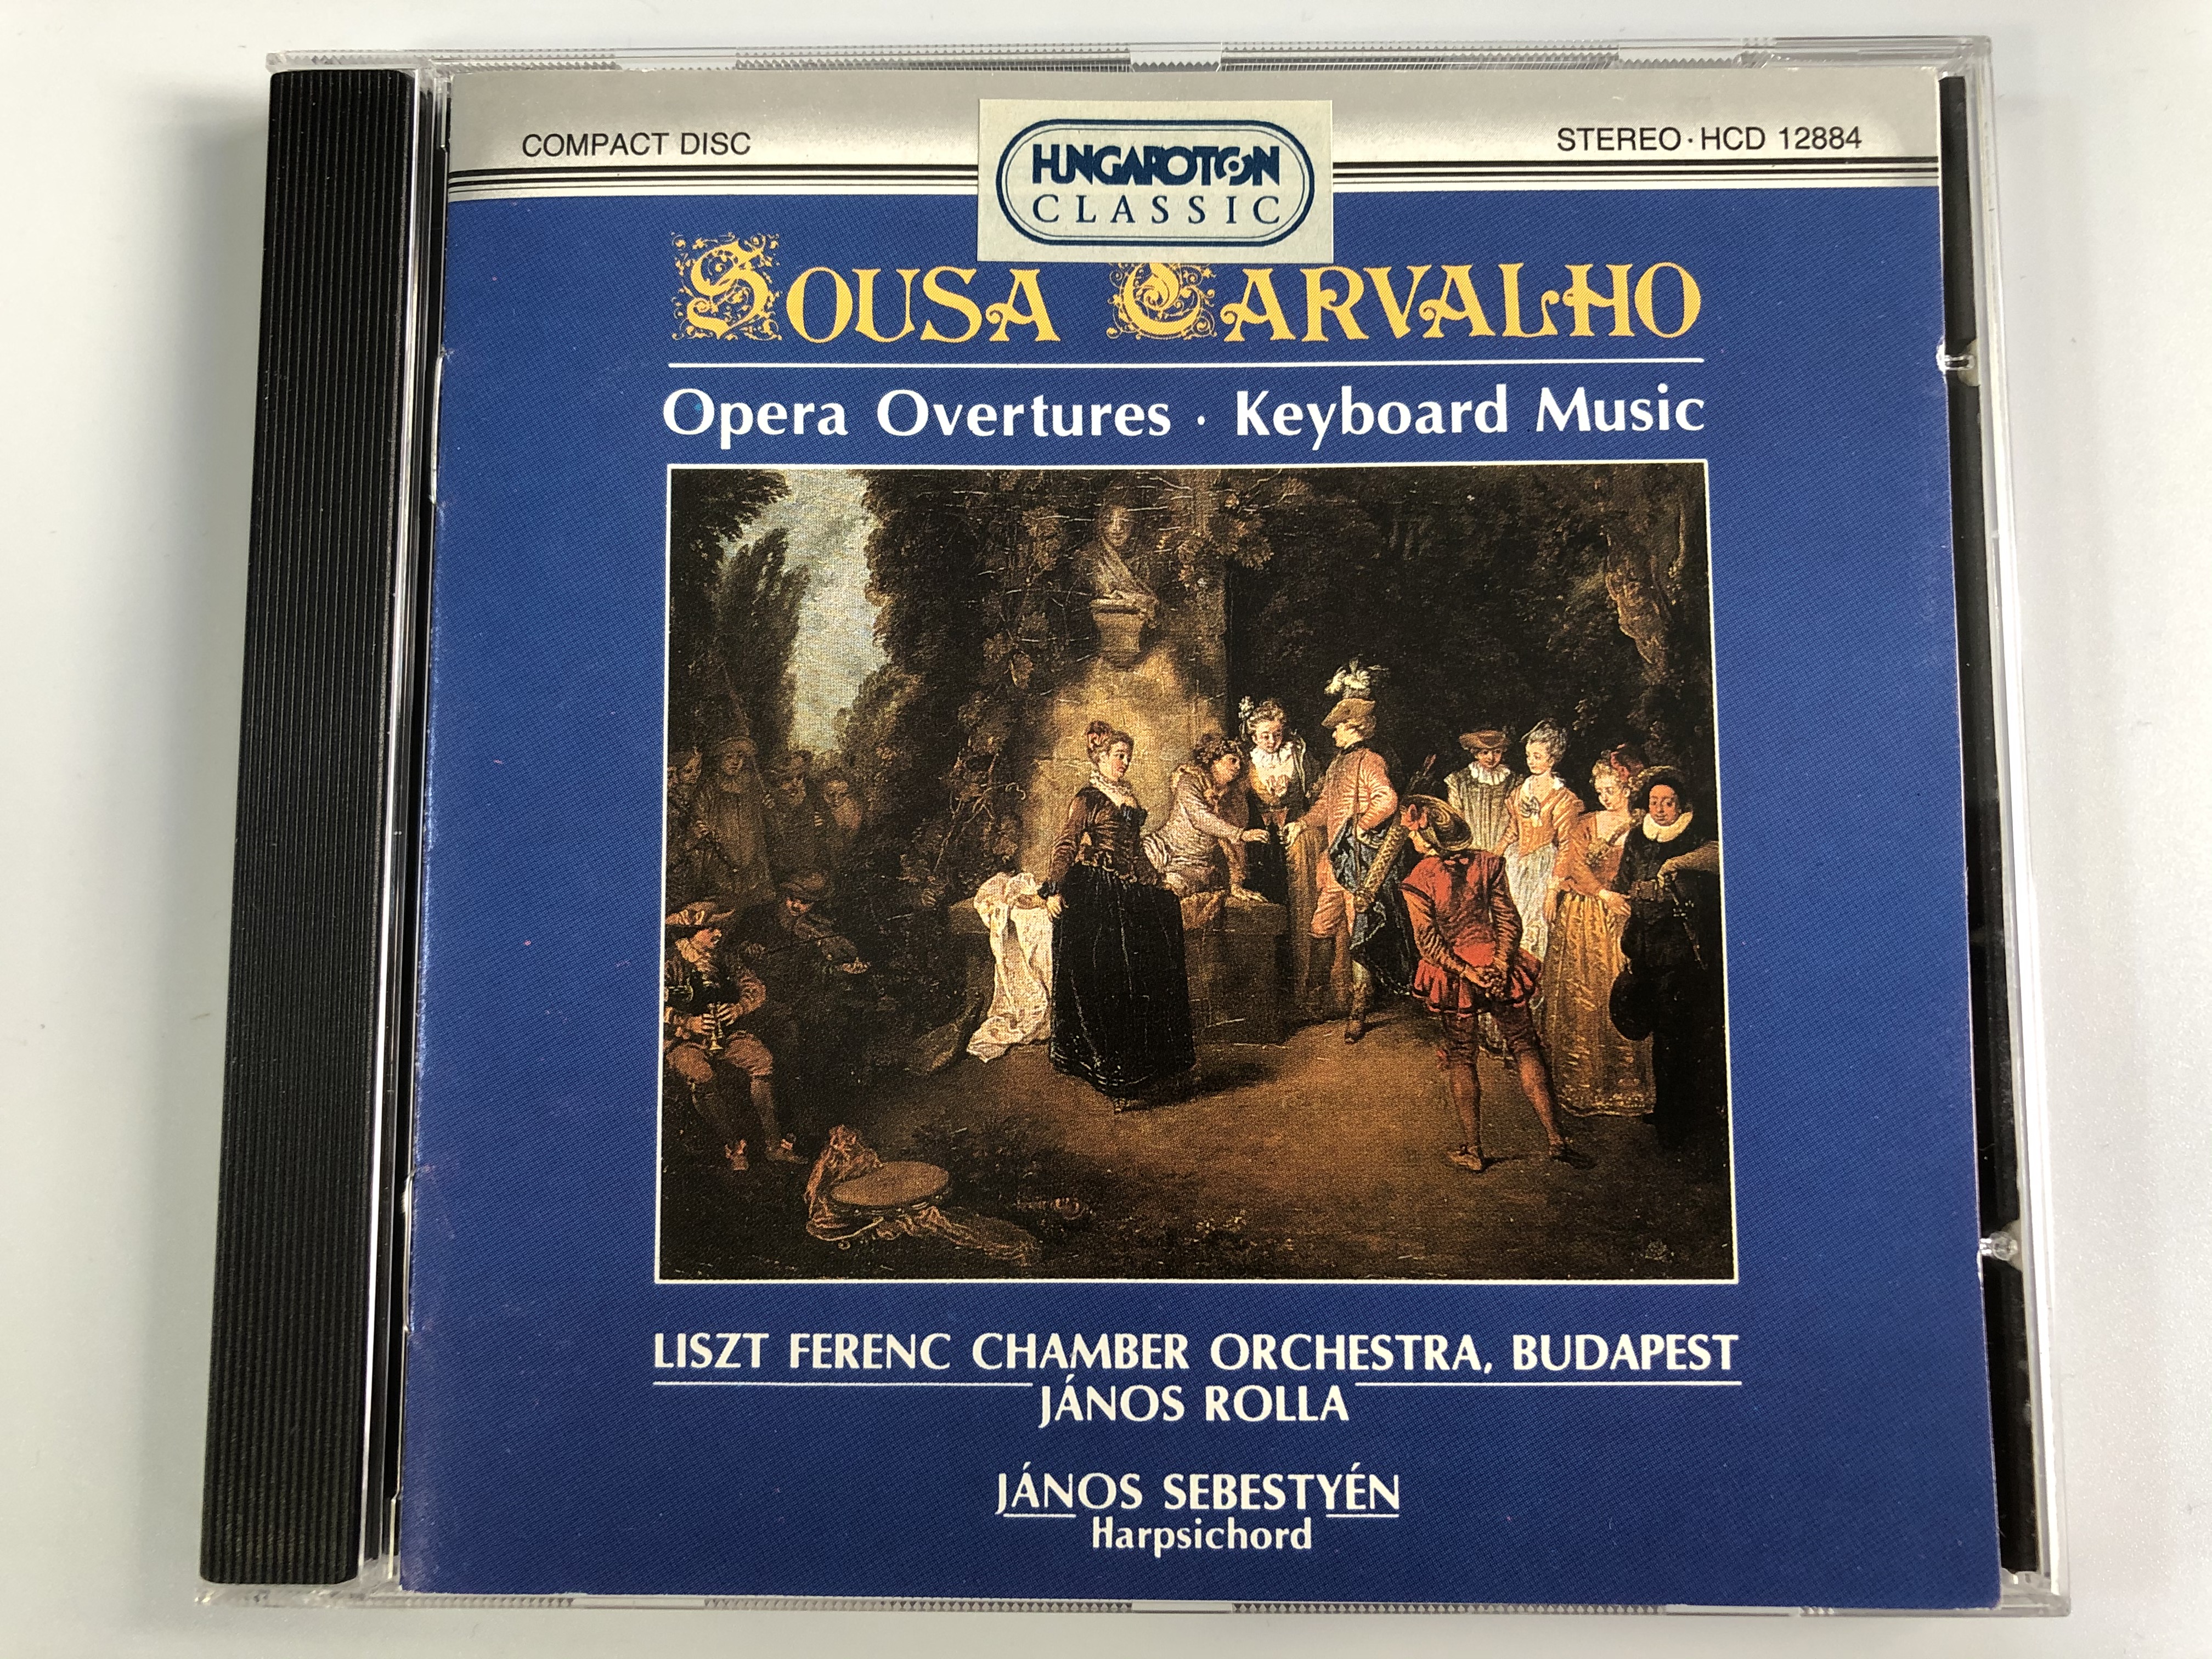 jo-o-de-sousa-carvalho-opera-overtures-keyboard-music-liszt-ferenc-chamber-orchestra-budapest-j-nos-rolla-j-nos-sebesty-n-harpsichord-hungaroton-audio-cd-1994-stereo-hcd-12884-1-.jpg